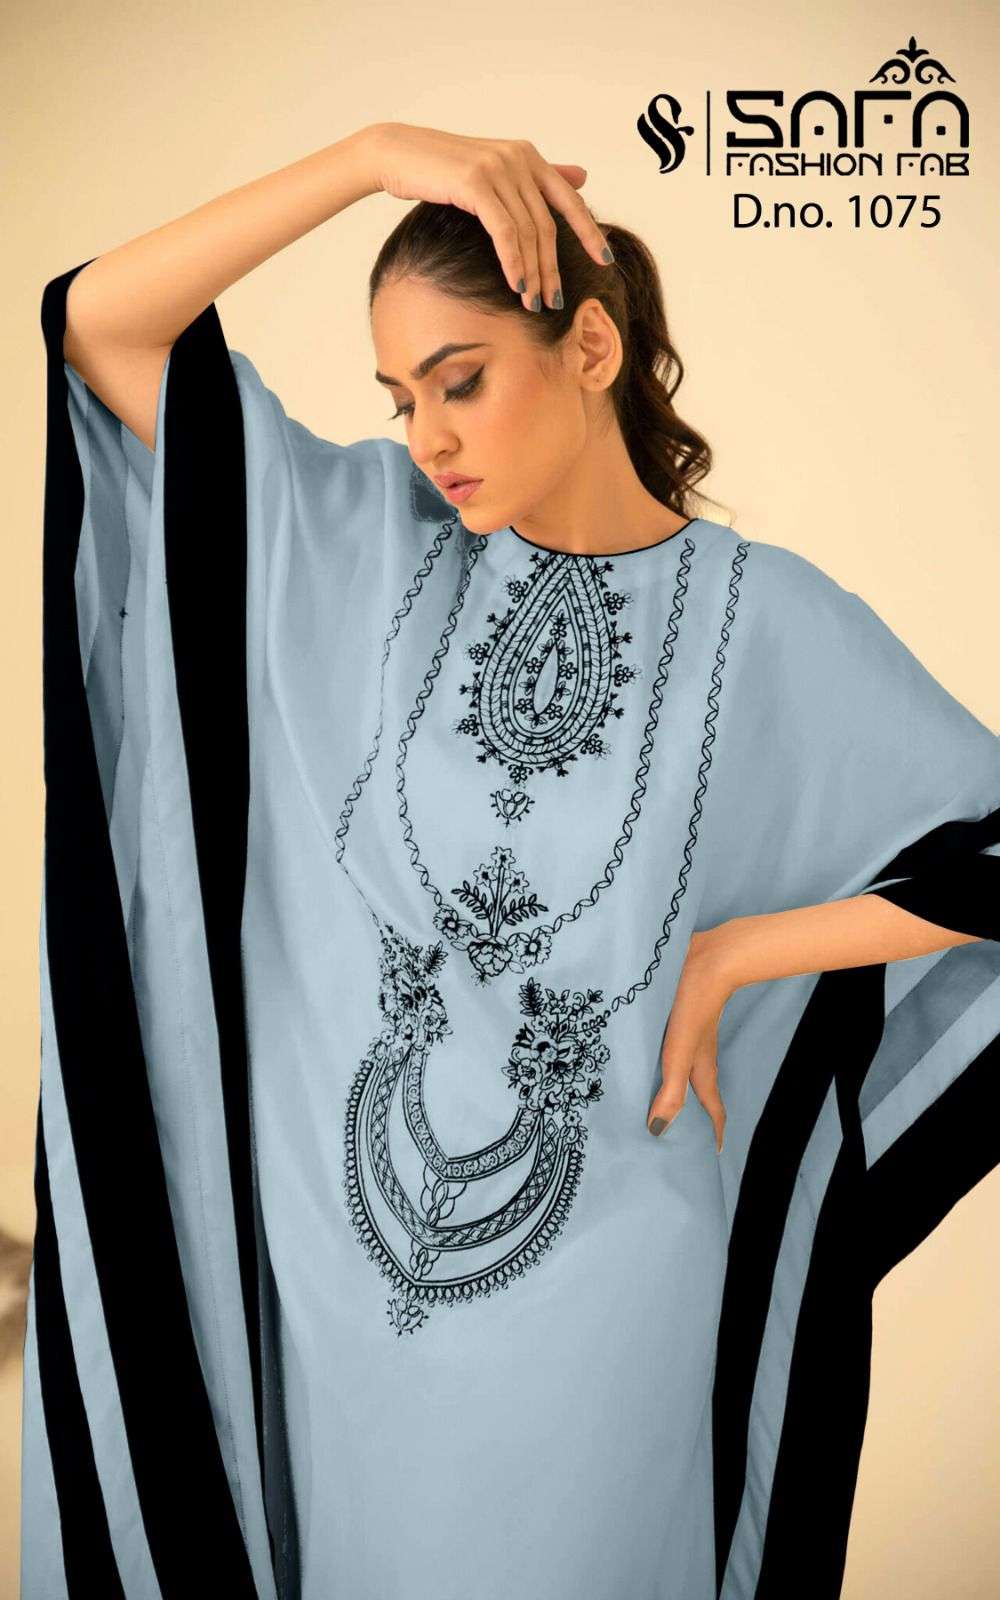 safa fashion fab 1027 series readymade designer pakistani salwar suits surat